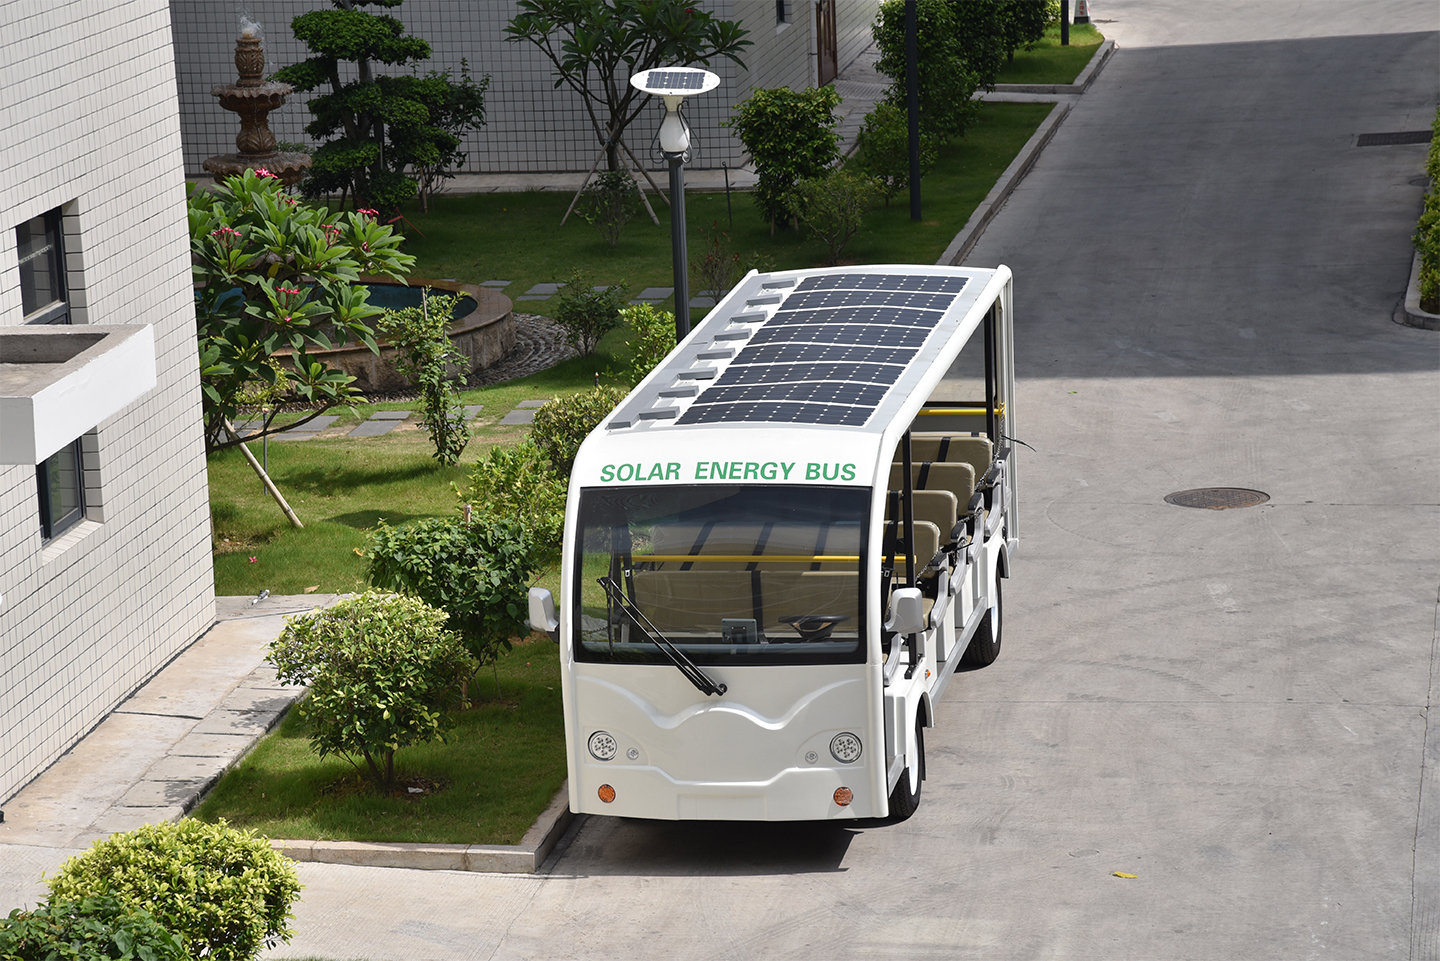 800W high efficiency flexible solar panel for solar energy bus application-NEWLIGHT ENERGY